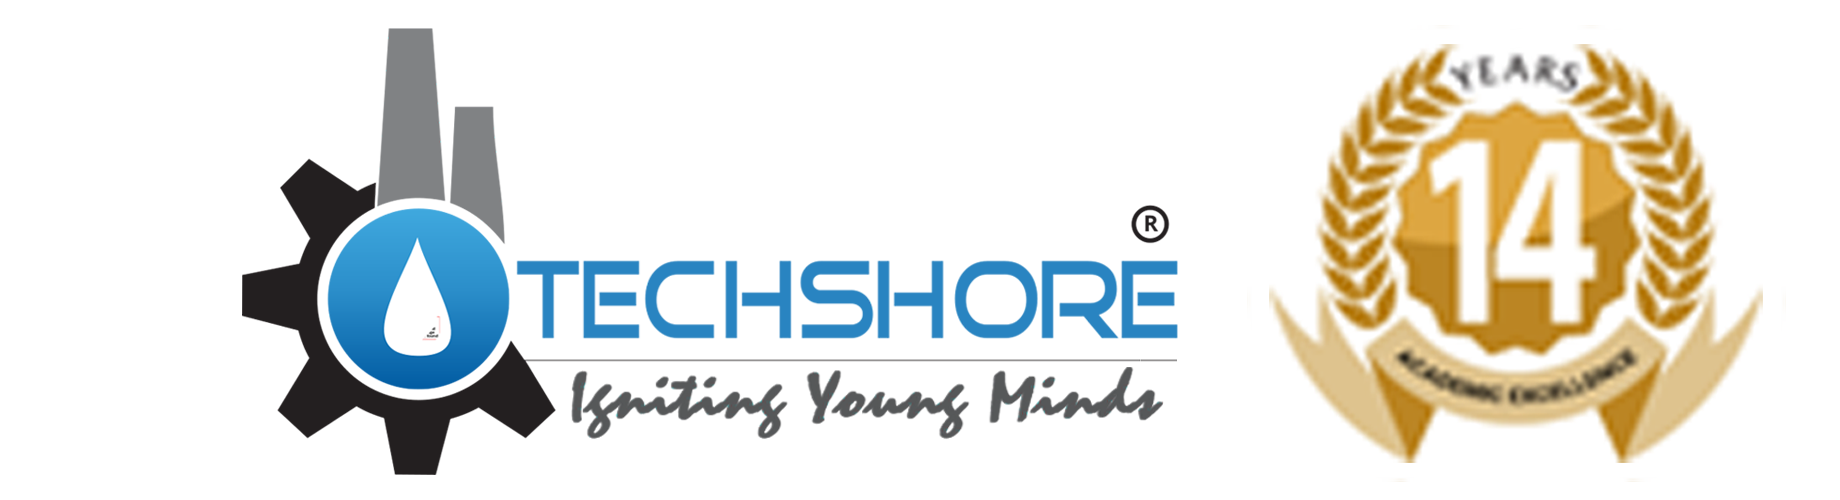 Techshore Oil and Gas Institute logo